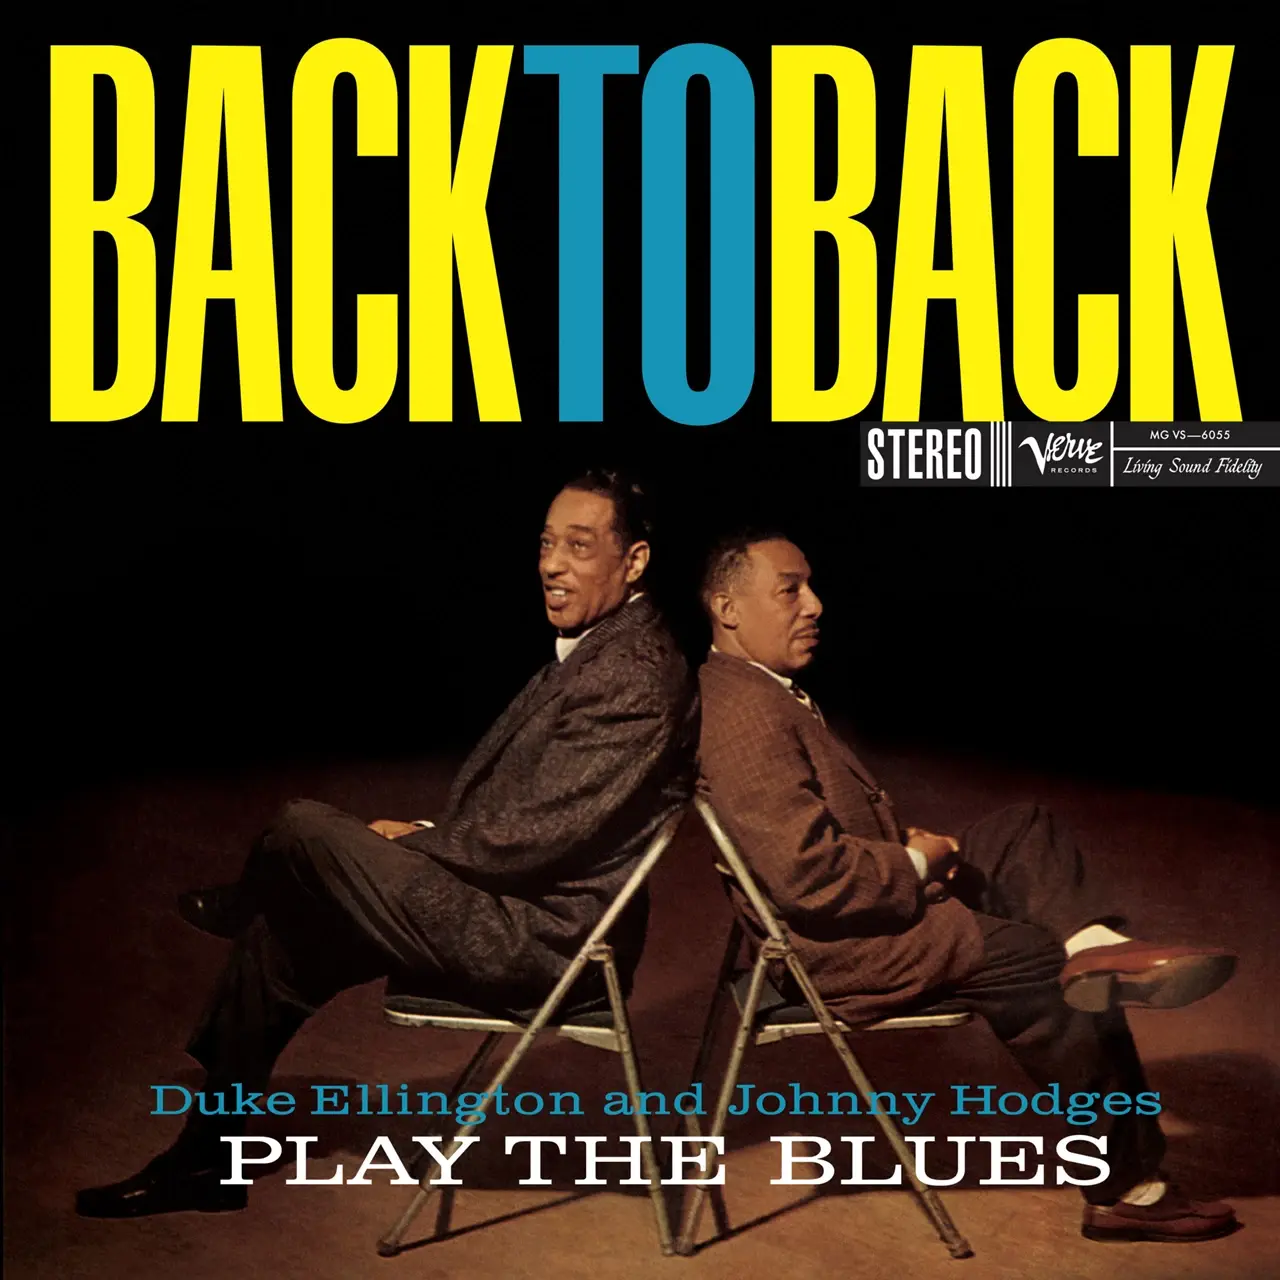 Decca (UMO) / Jazz / Verve Duke Ellington and Johnny Hodges – Back to Back (Acoustic Sounds)